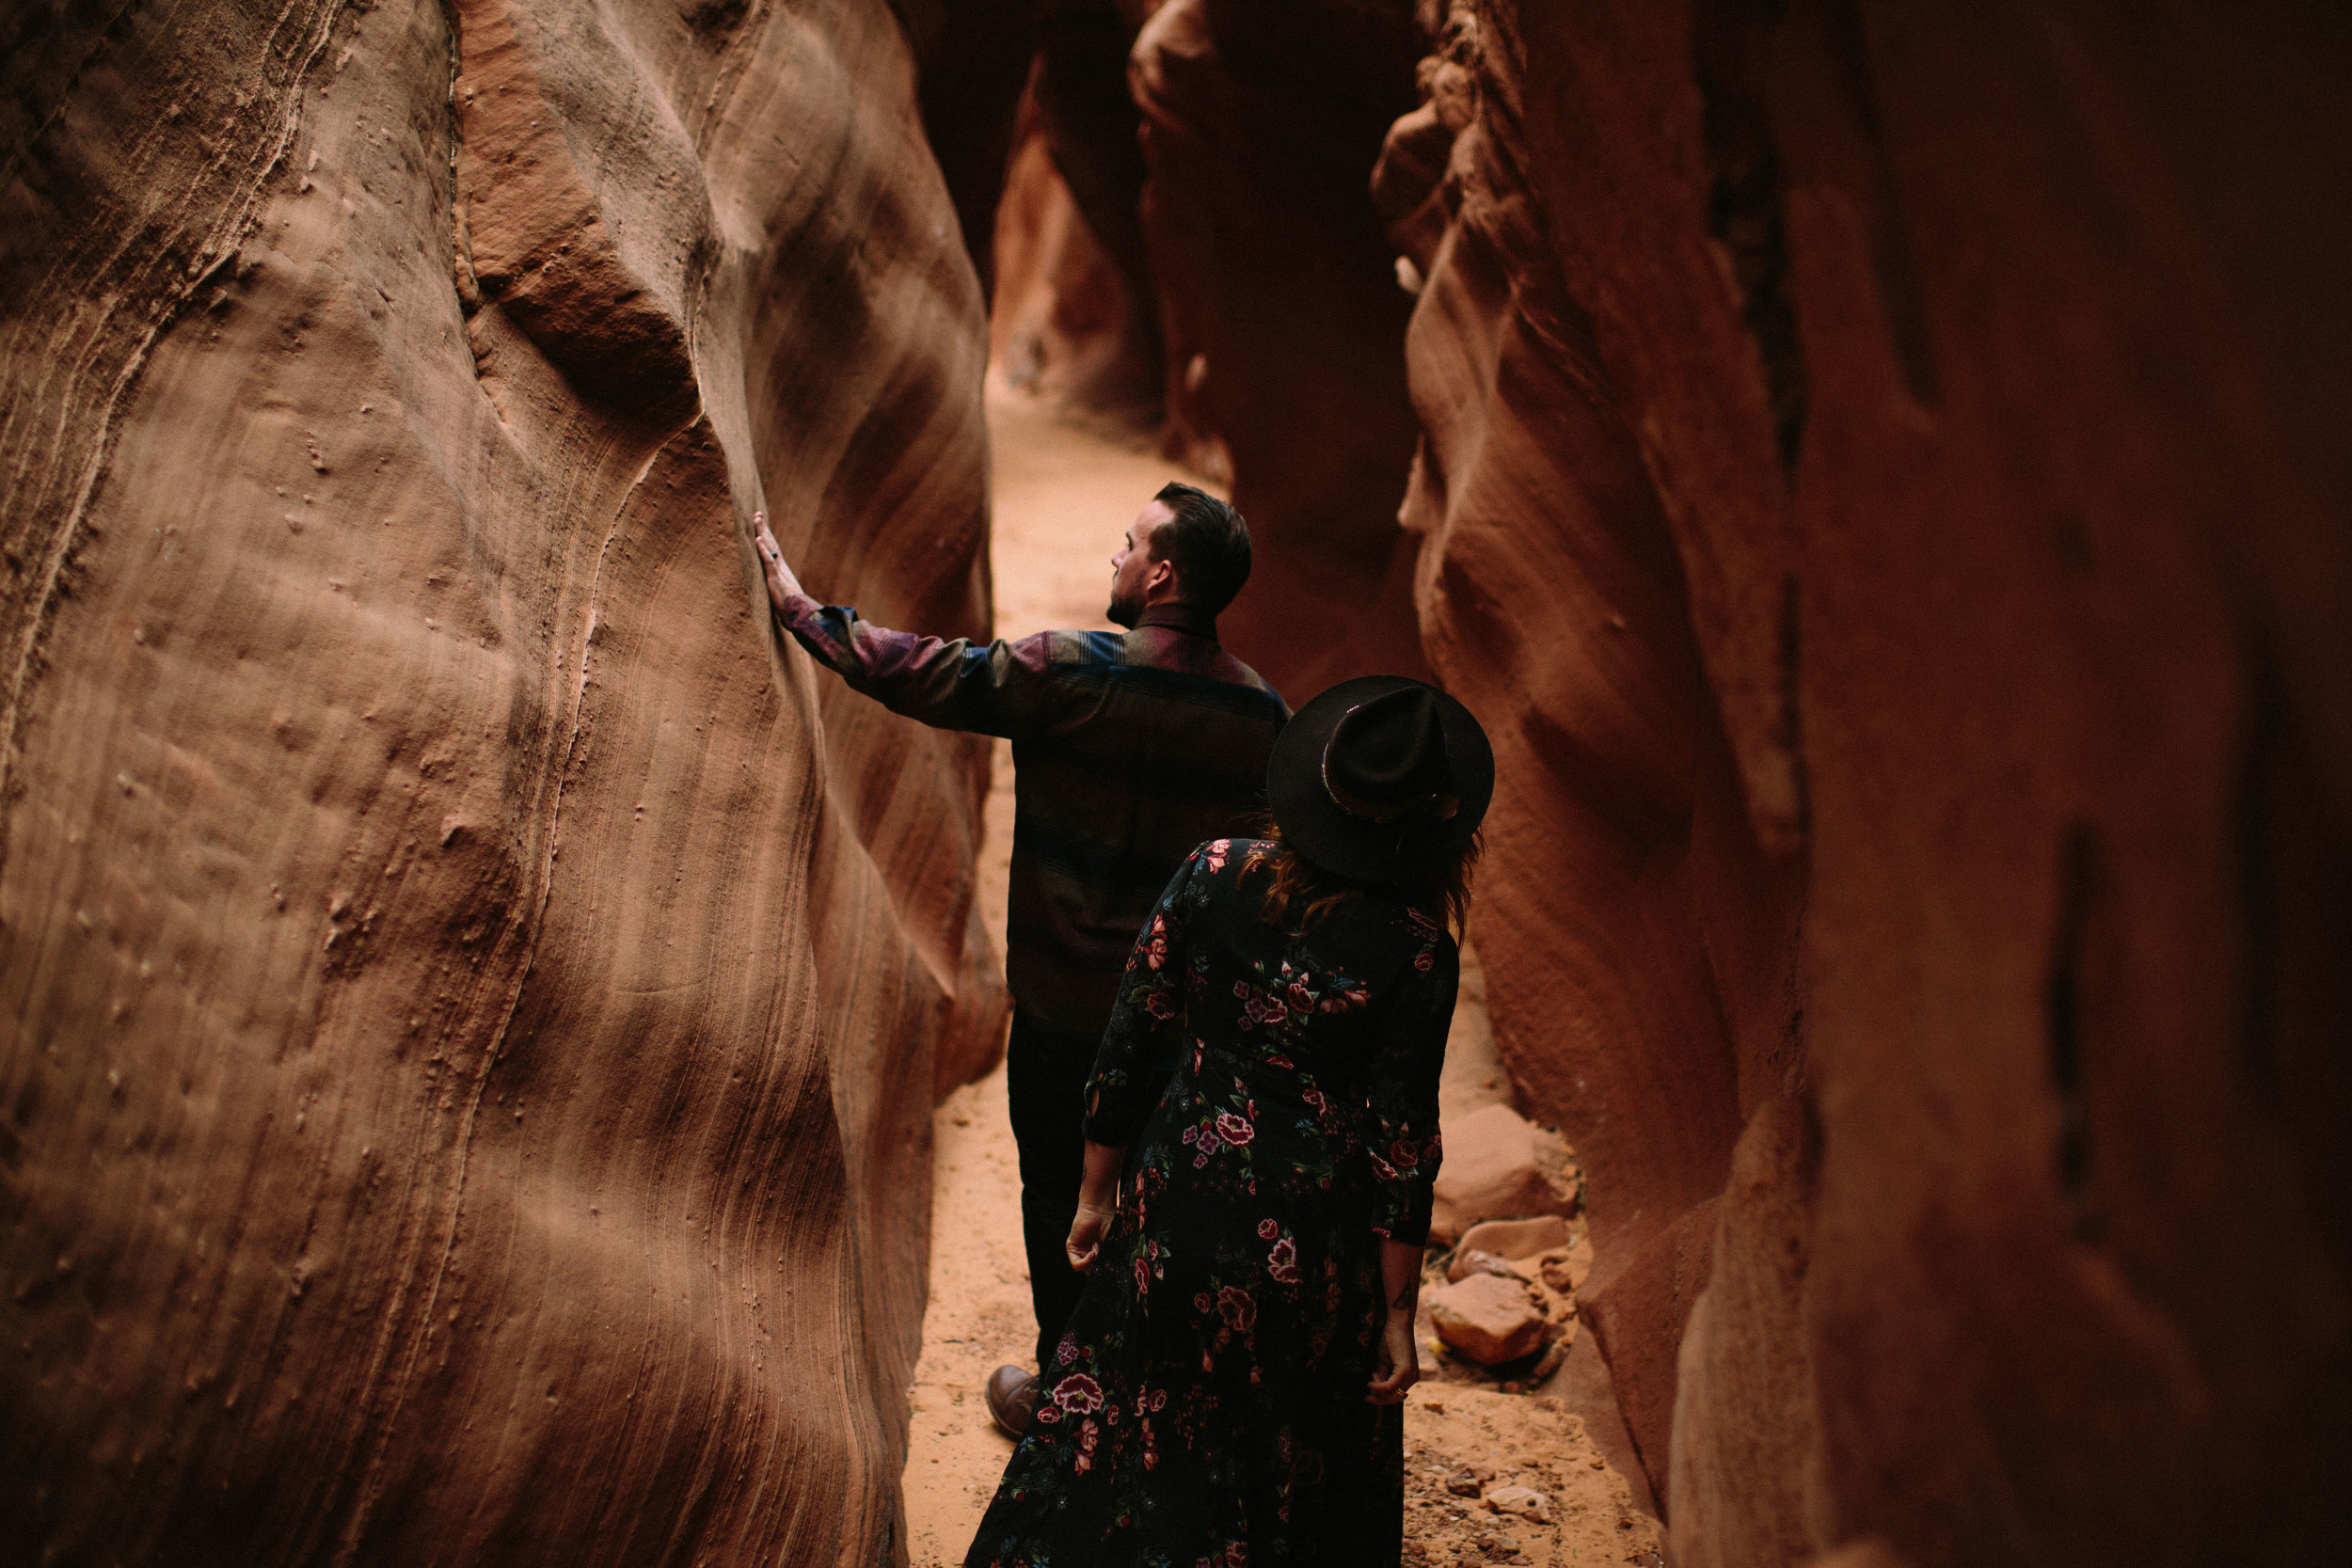 Arizona Engagement Photographer | Benjamin Hewitt Photography | Antelope Canyon - Waterhole Canyon